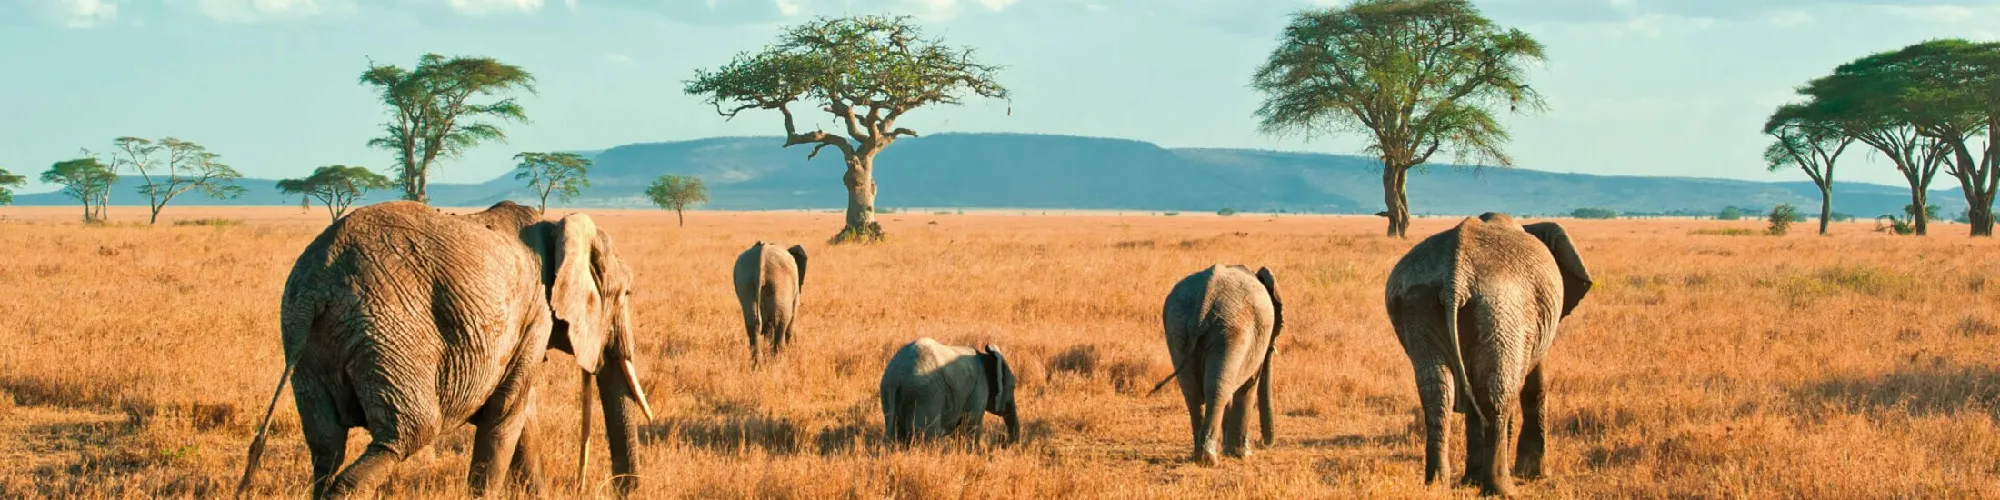 Traumreise nach Tansania background image